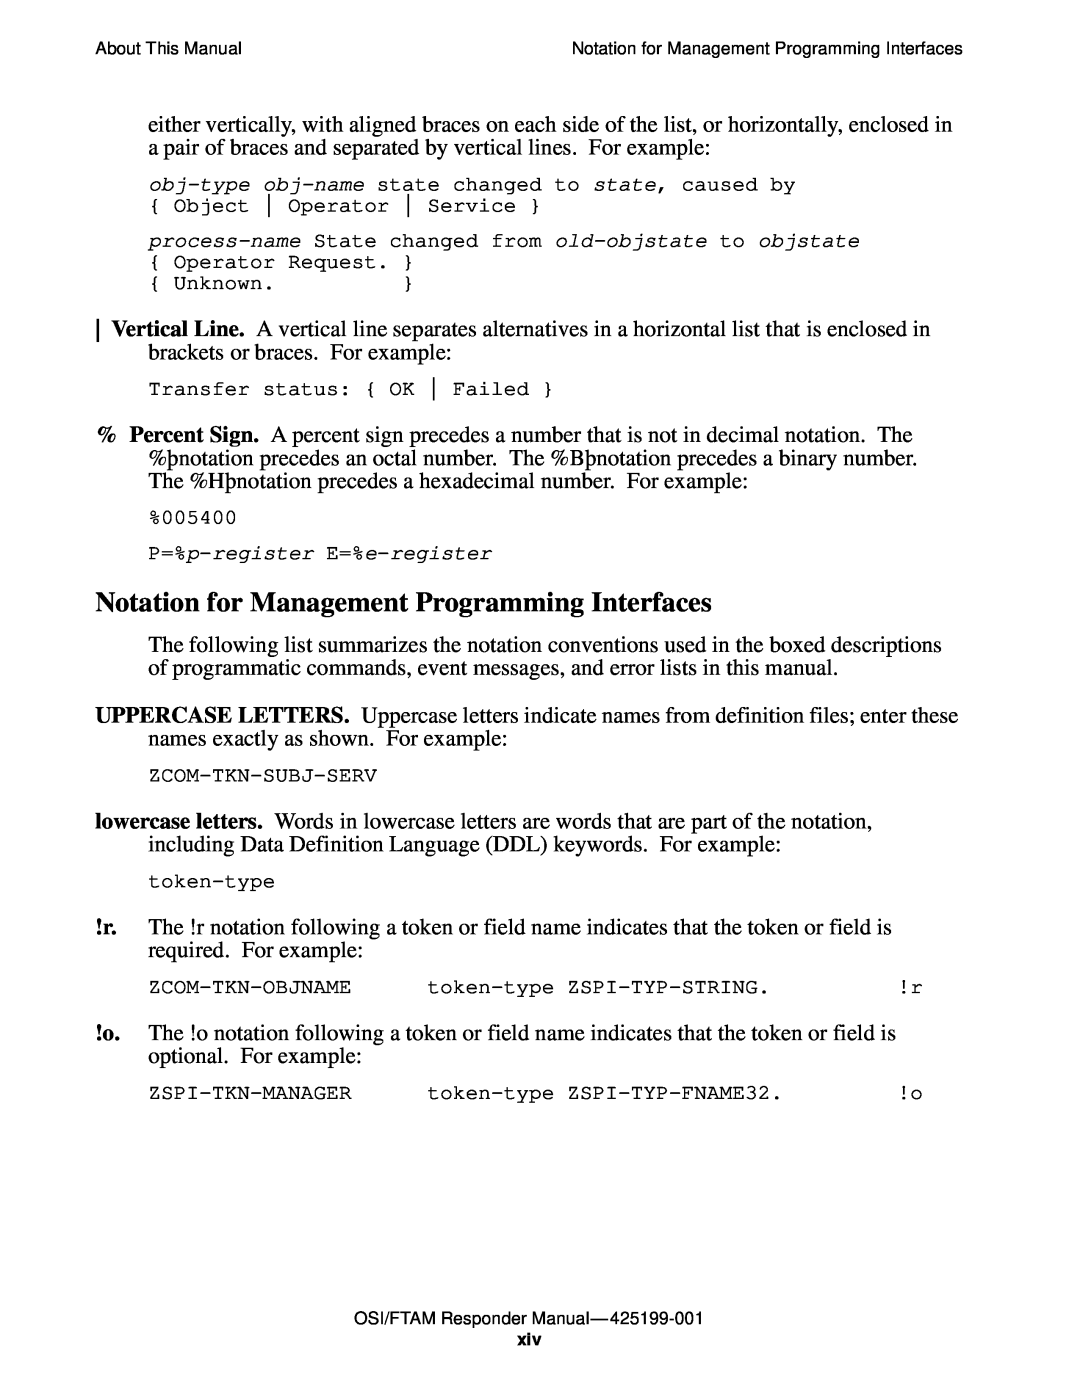 Compaq OSI/APLMGR D43, OSI/FTAM D43 manual Notation for Management Programming Interfaces 